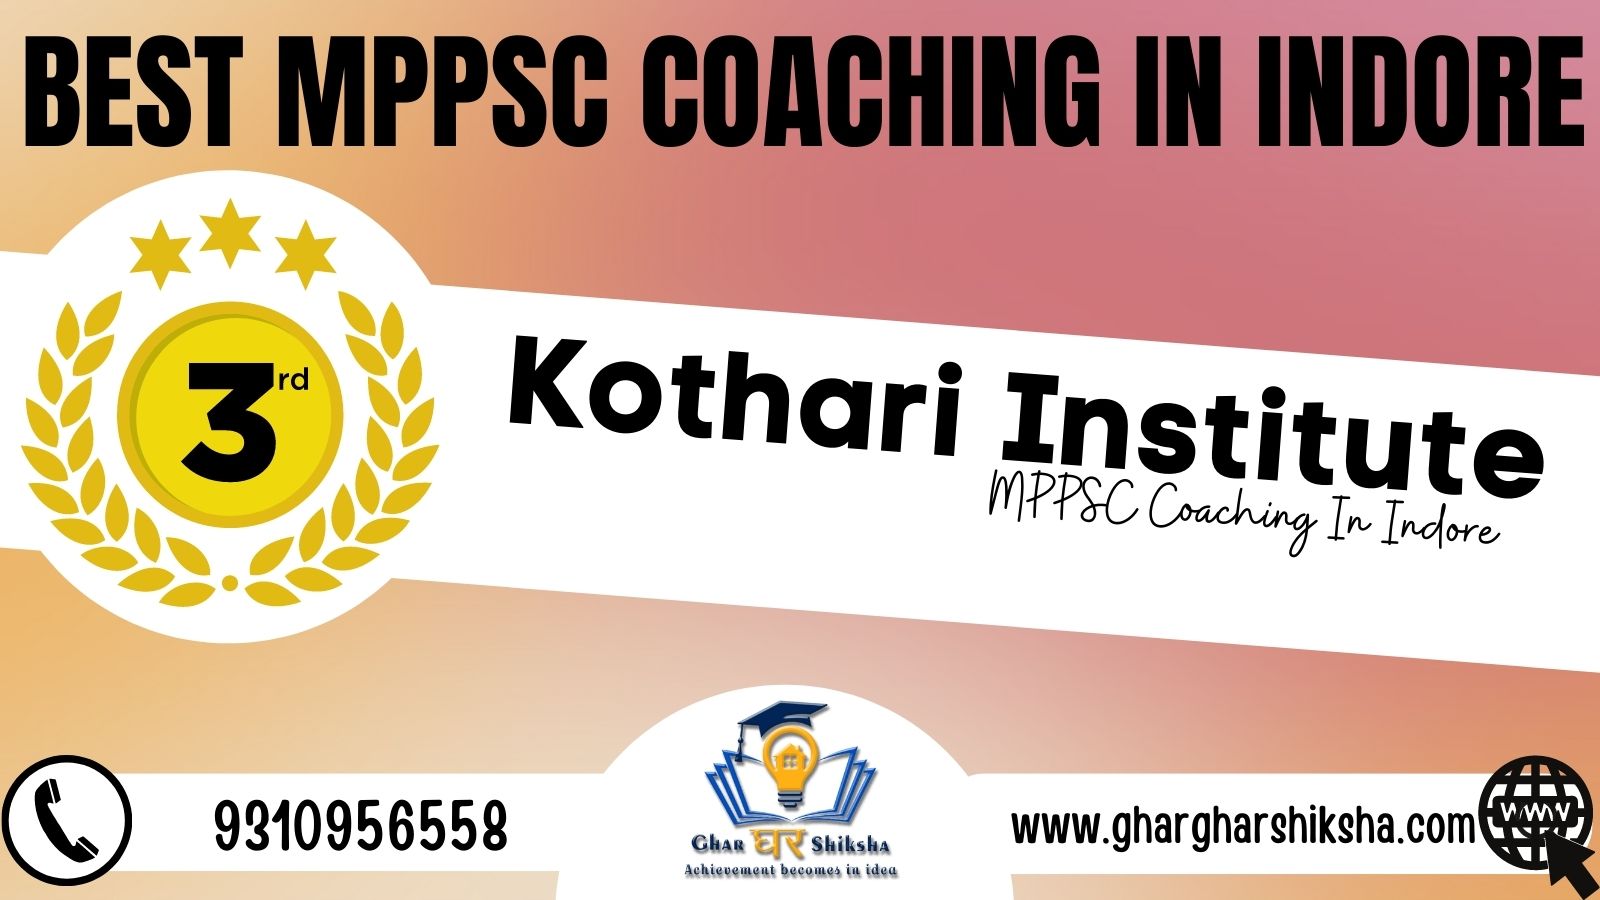 MPPSC Coaching In Indore kothari Institute